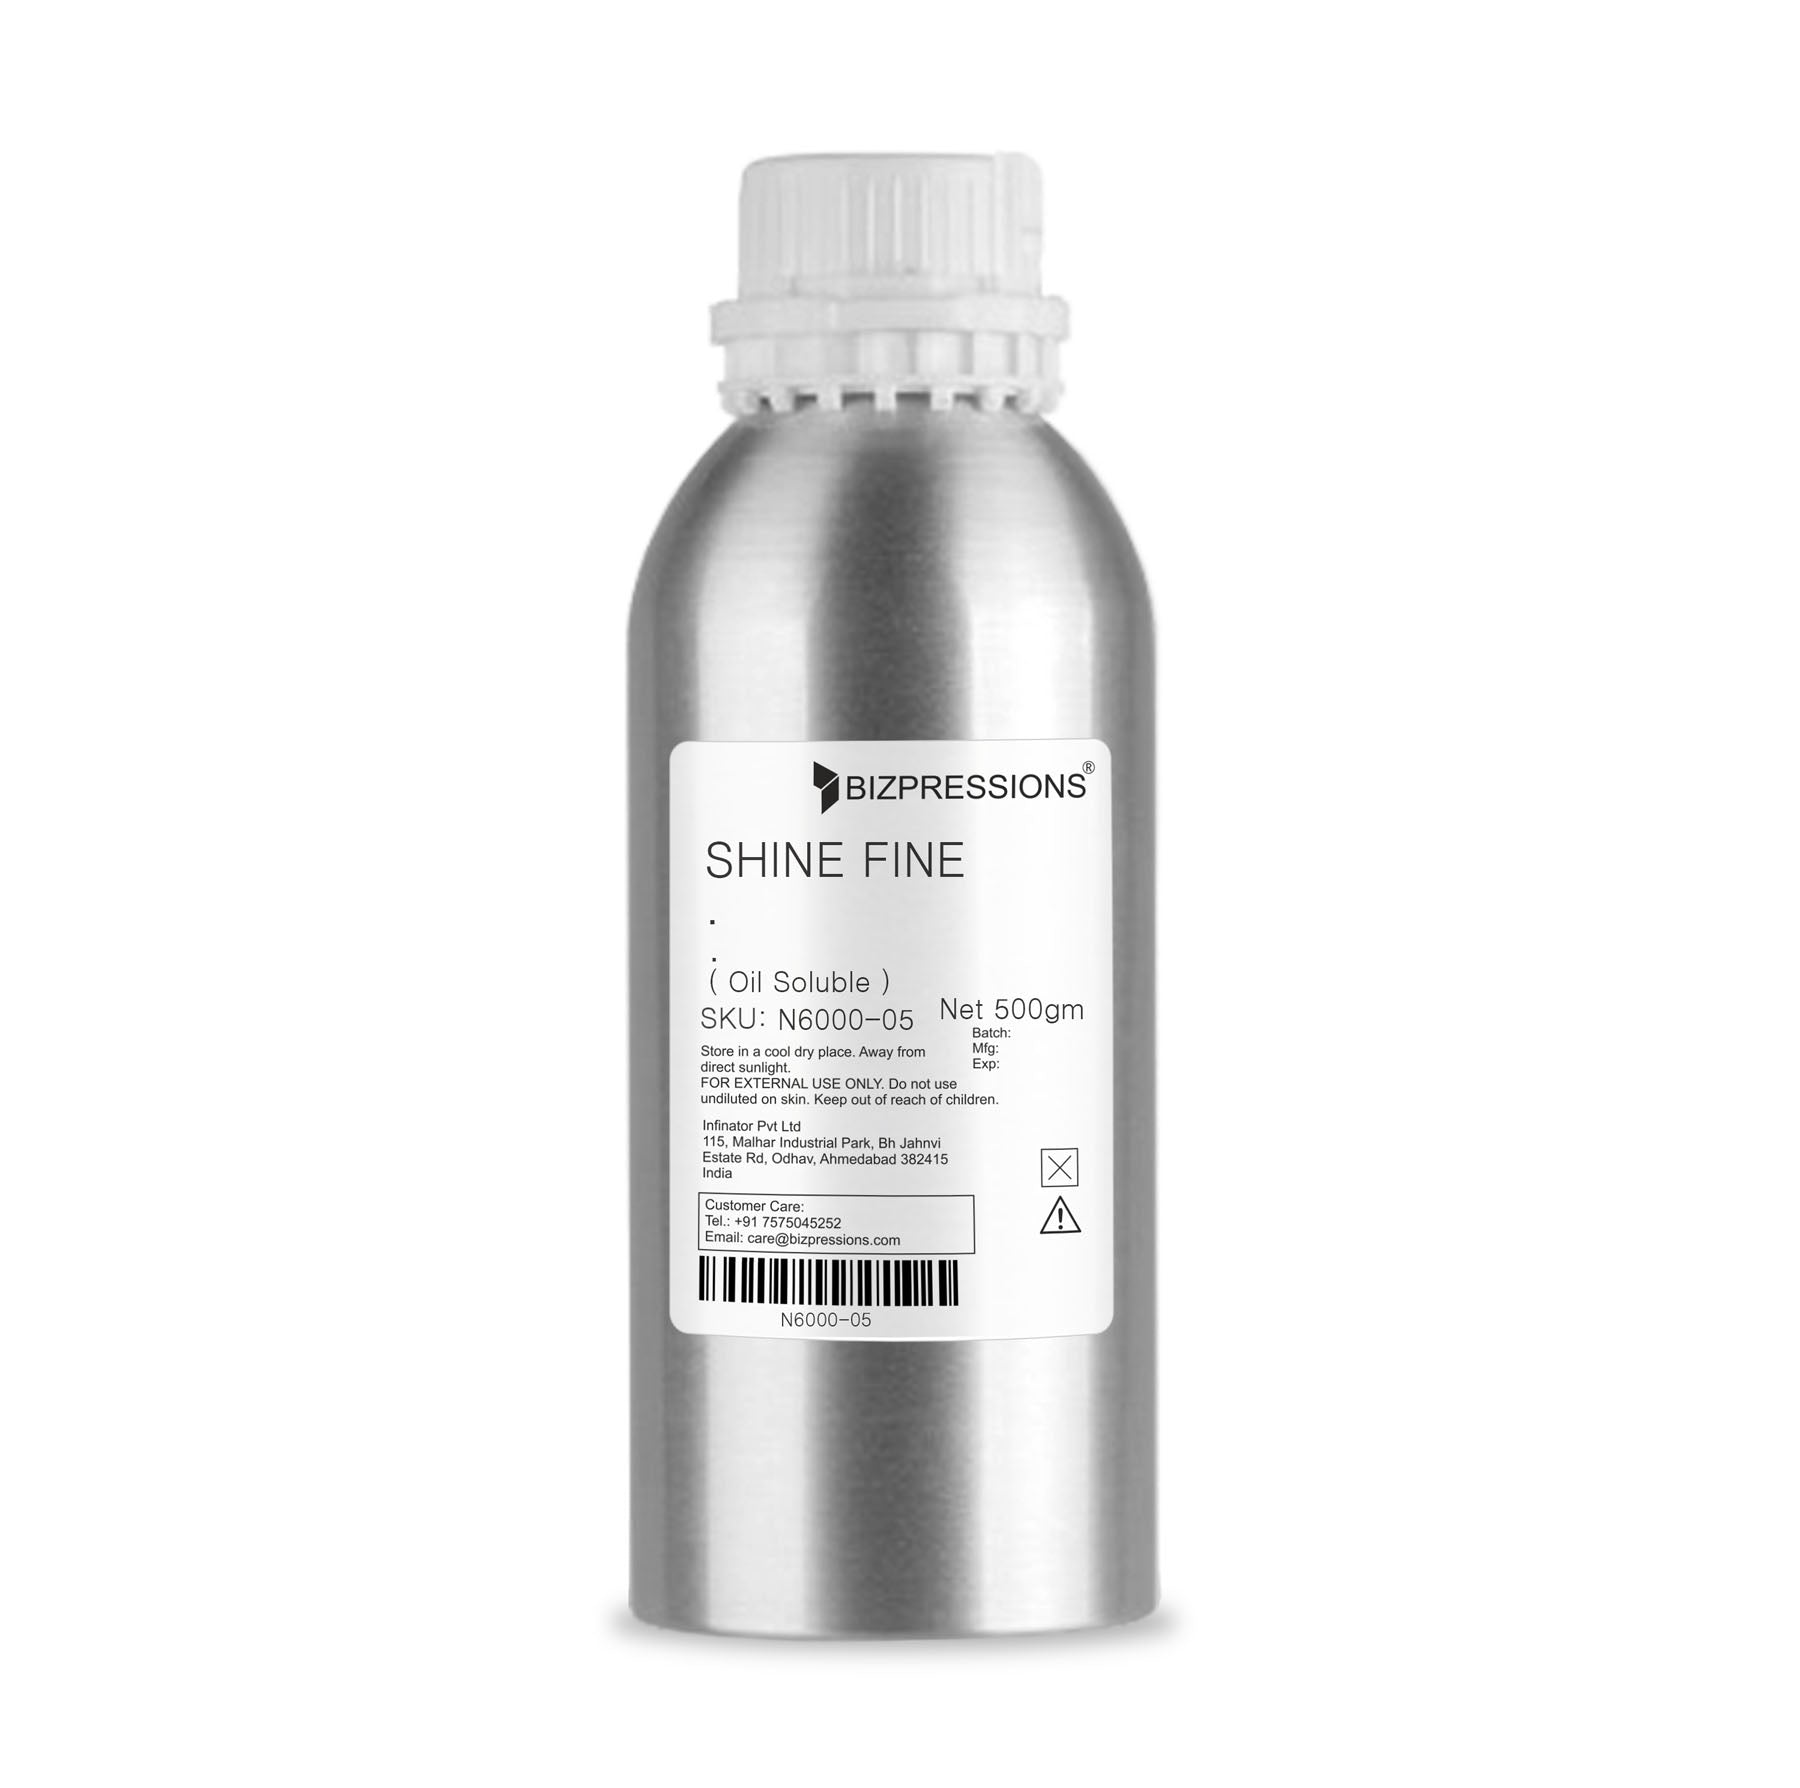 SHINE FINE - Fragrance ( Oil Soluble ) - 500 gm